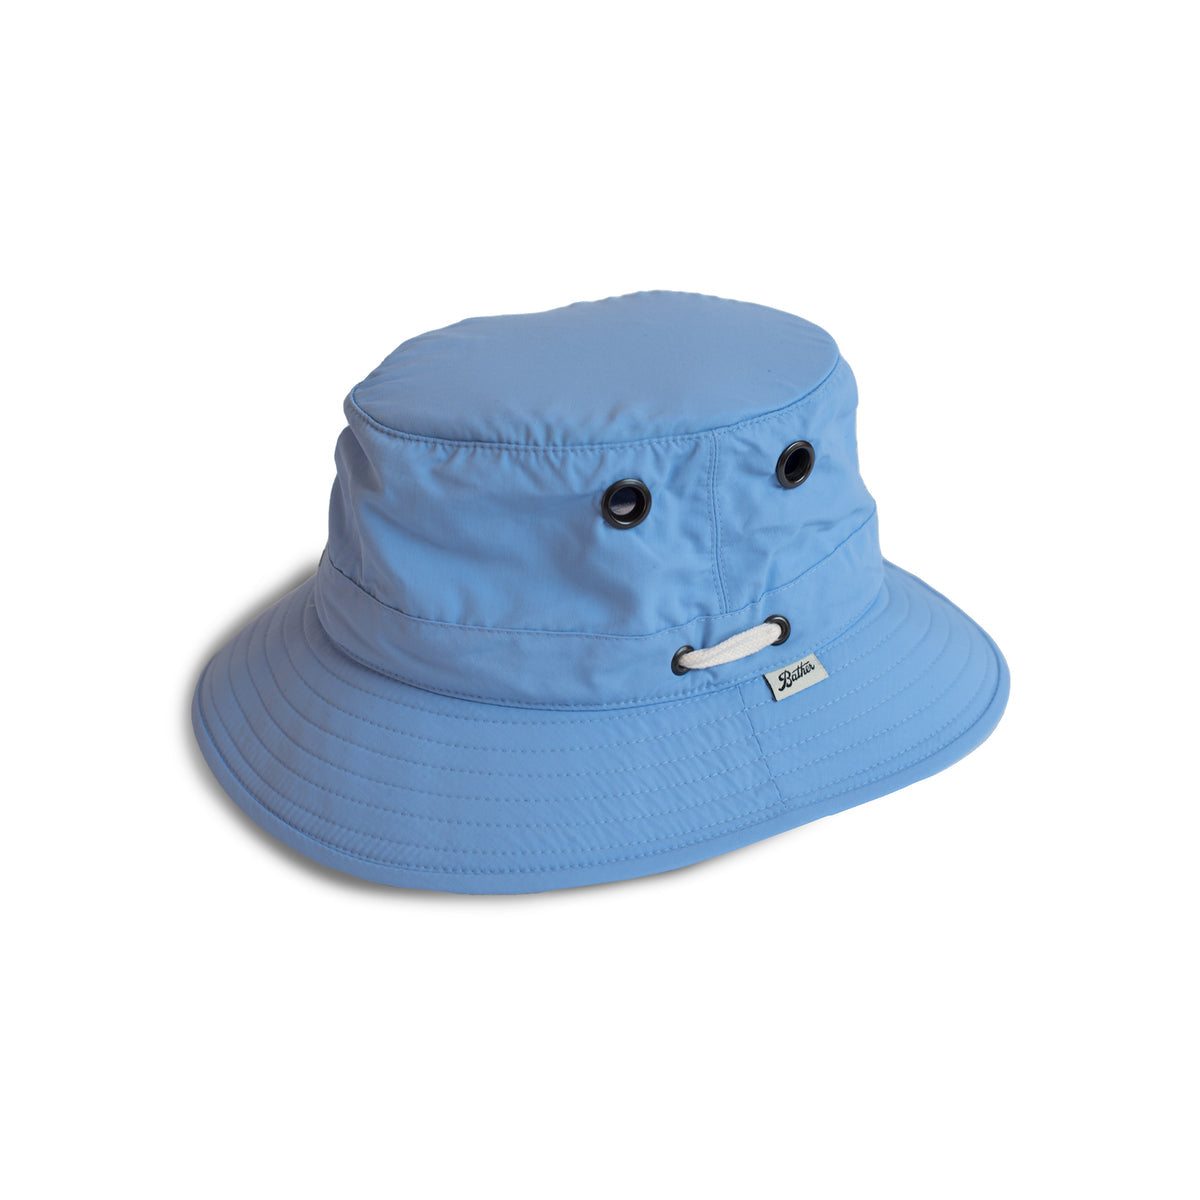 Bather Men’s Bucket Hat - Periwinkle L